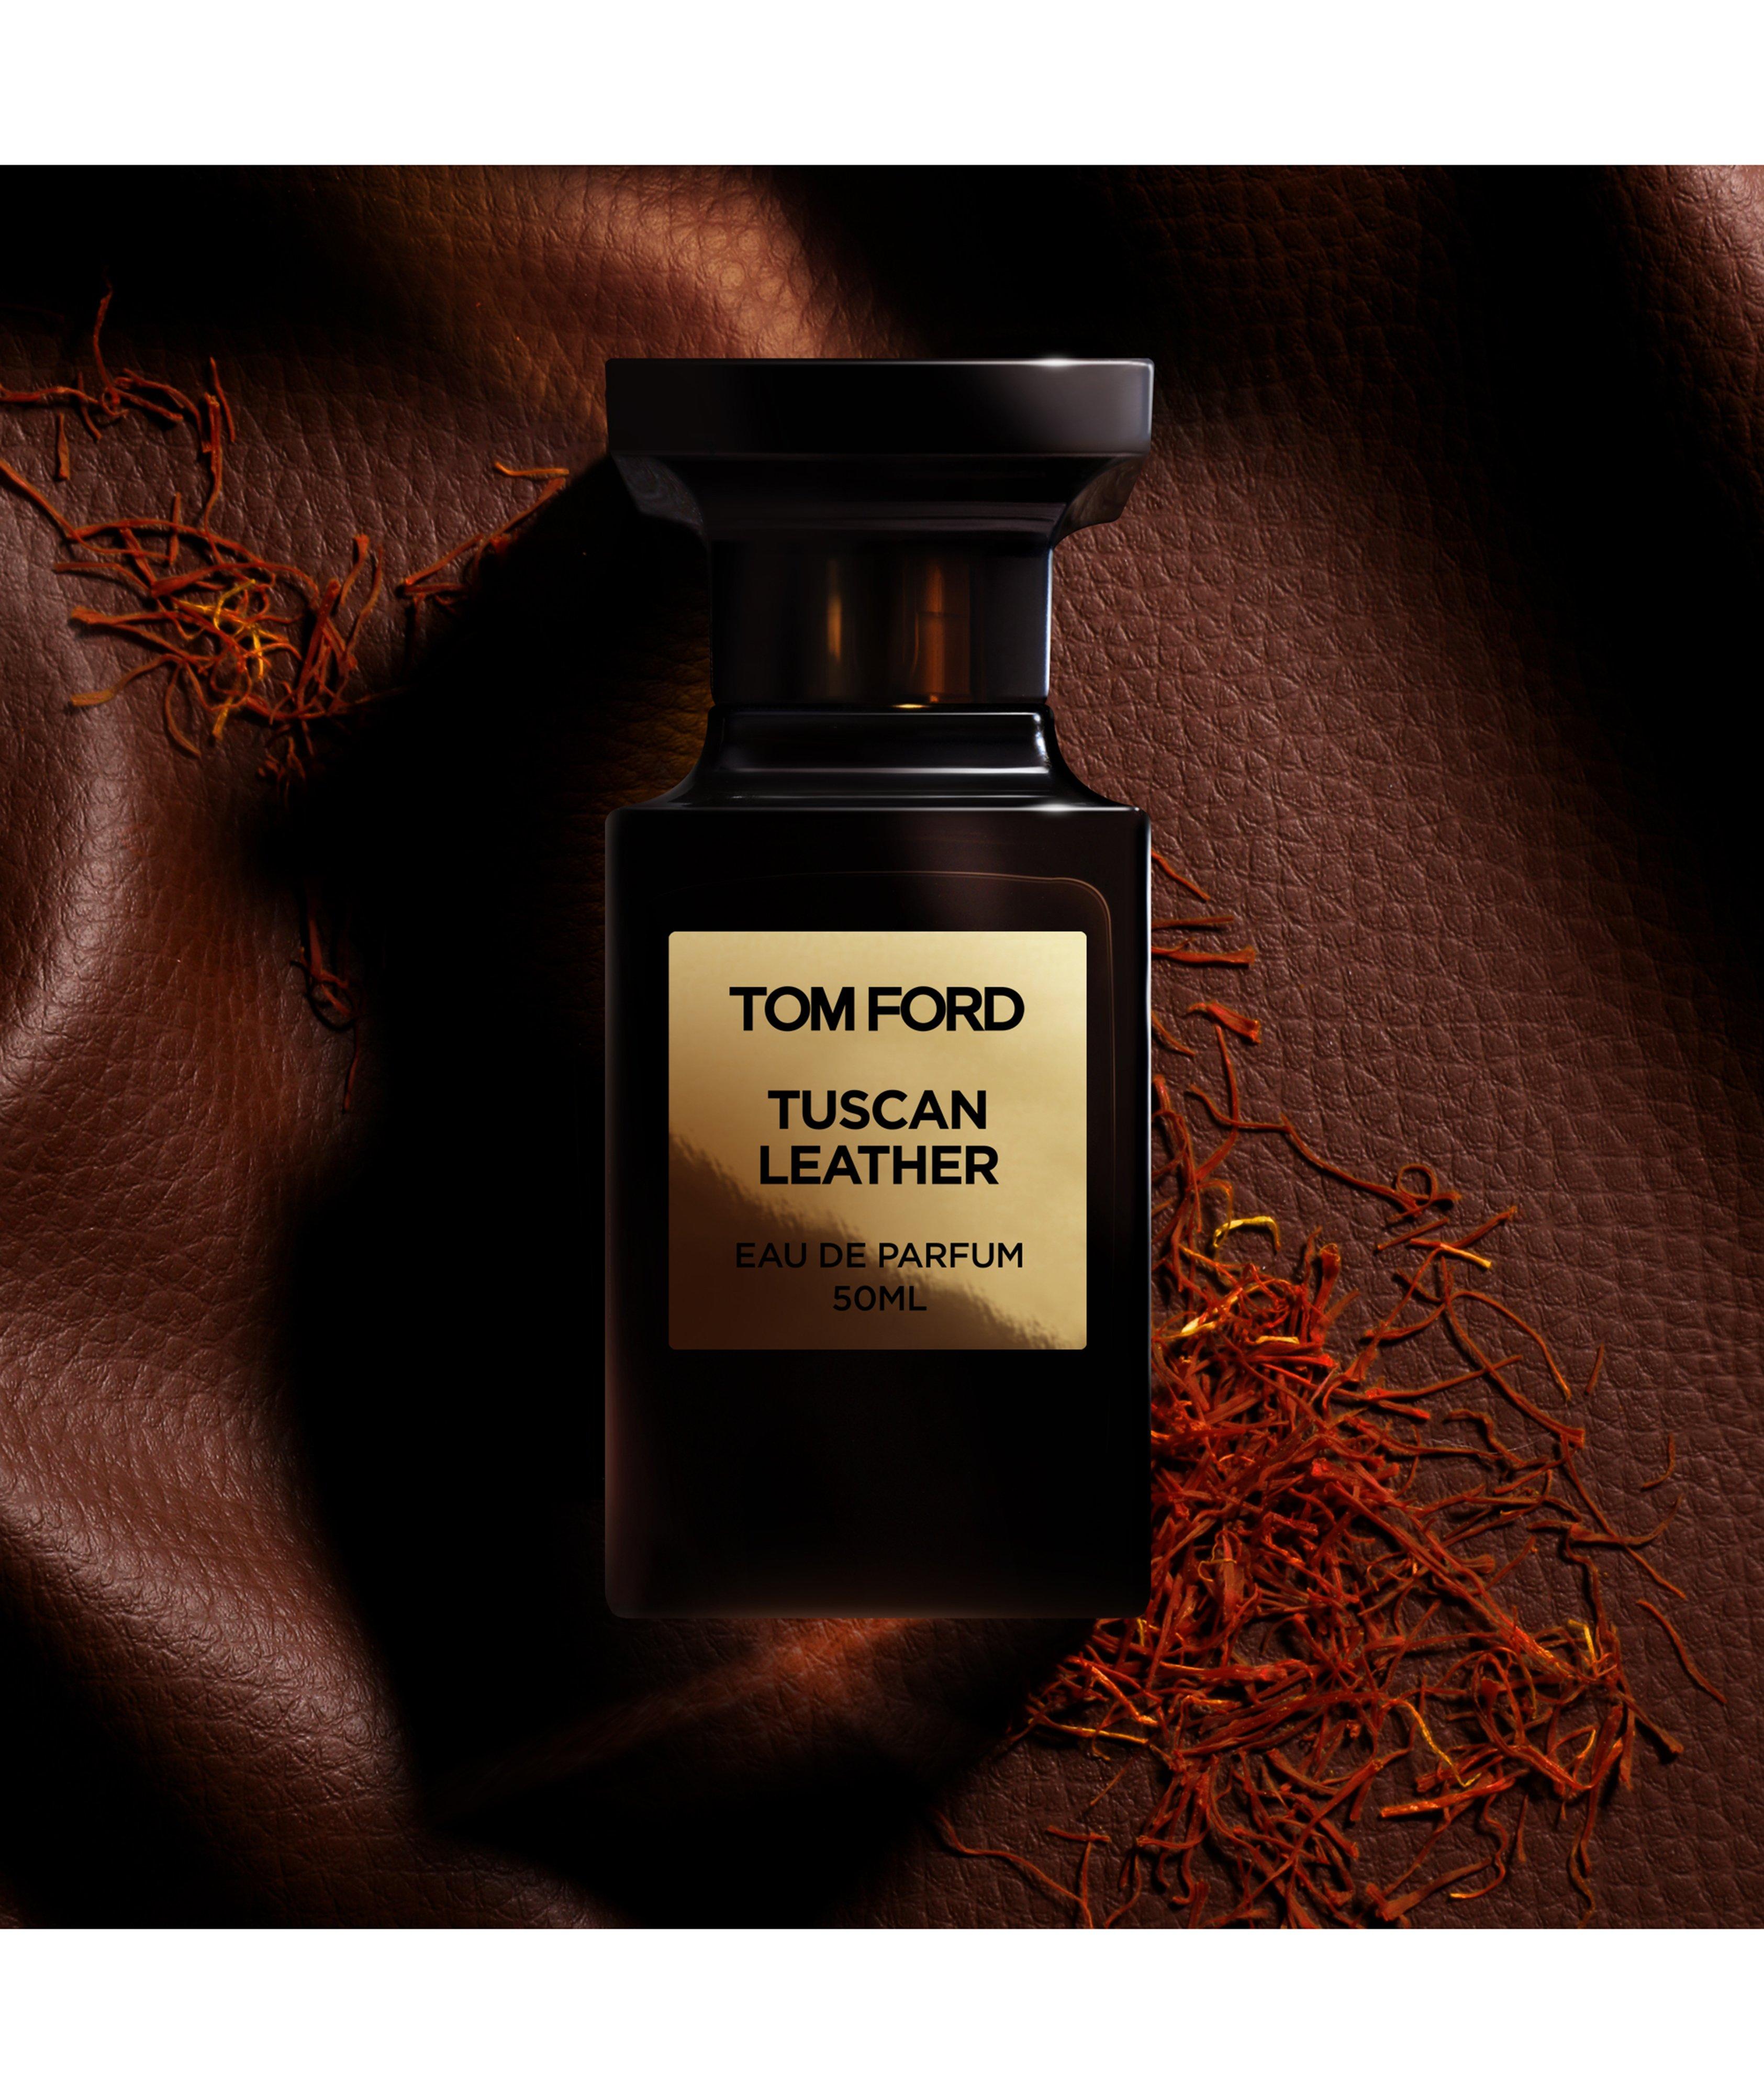 TOM FORD Tuscan Leather Eau De Parfum 250ml | Fragrance | Harry Rosen